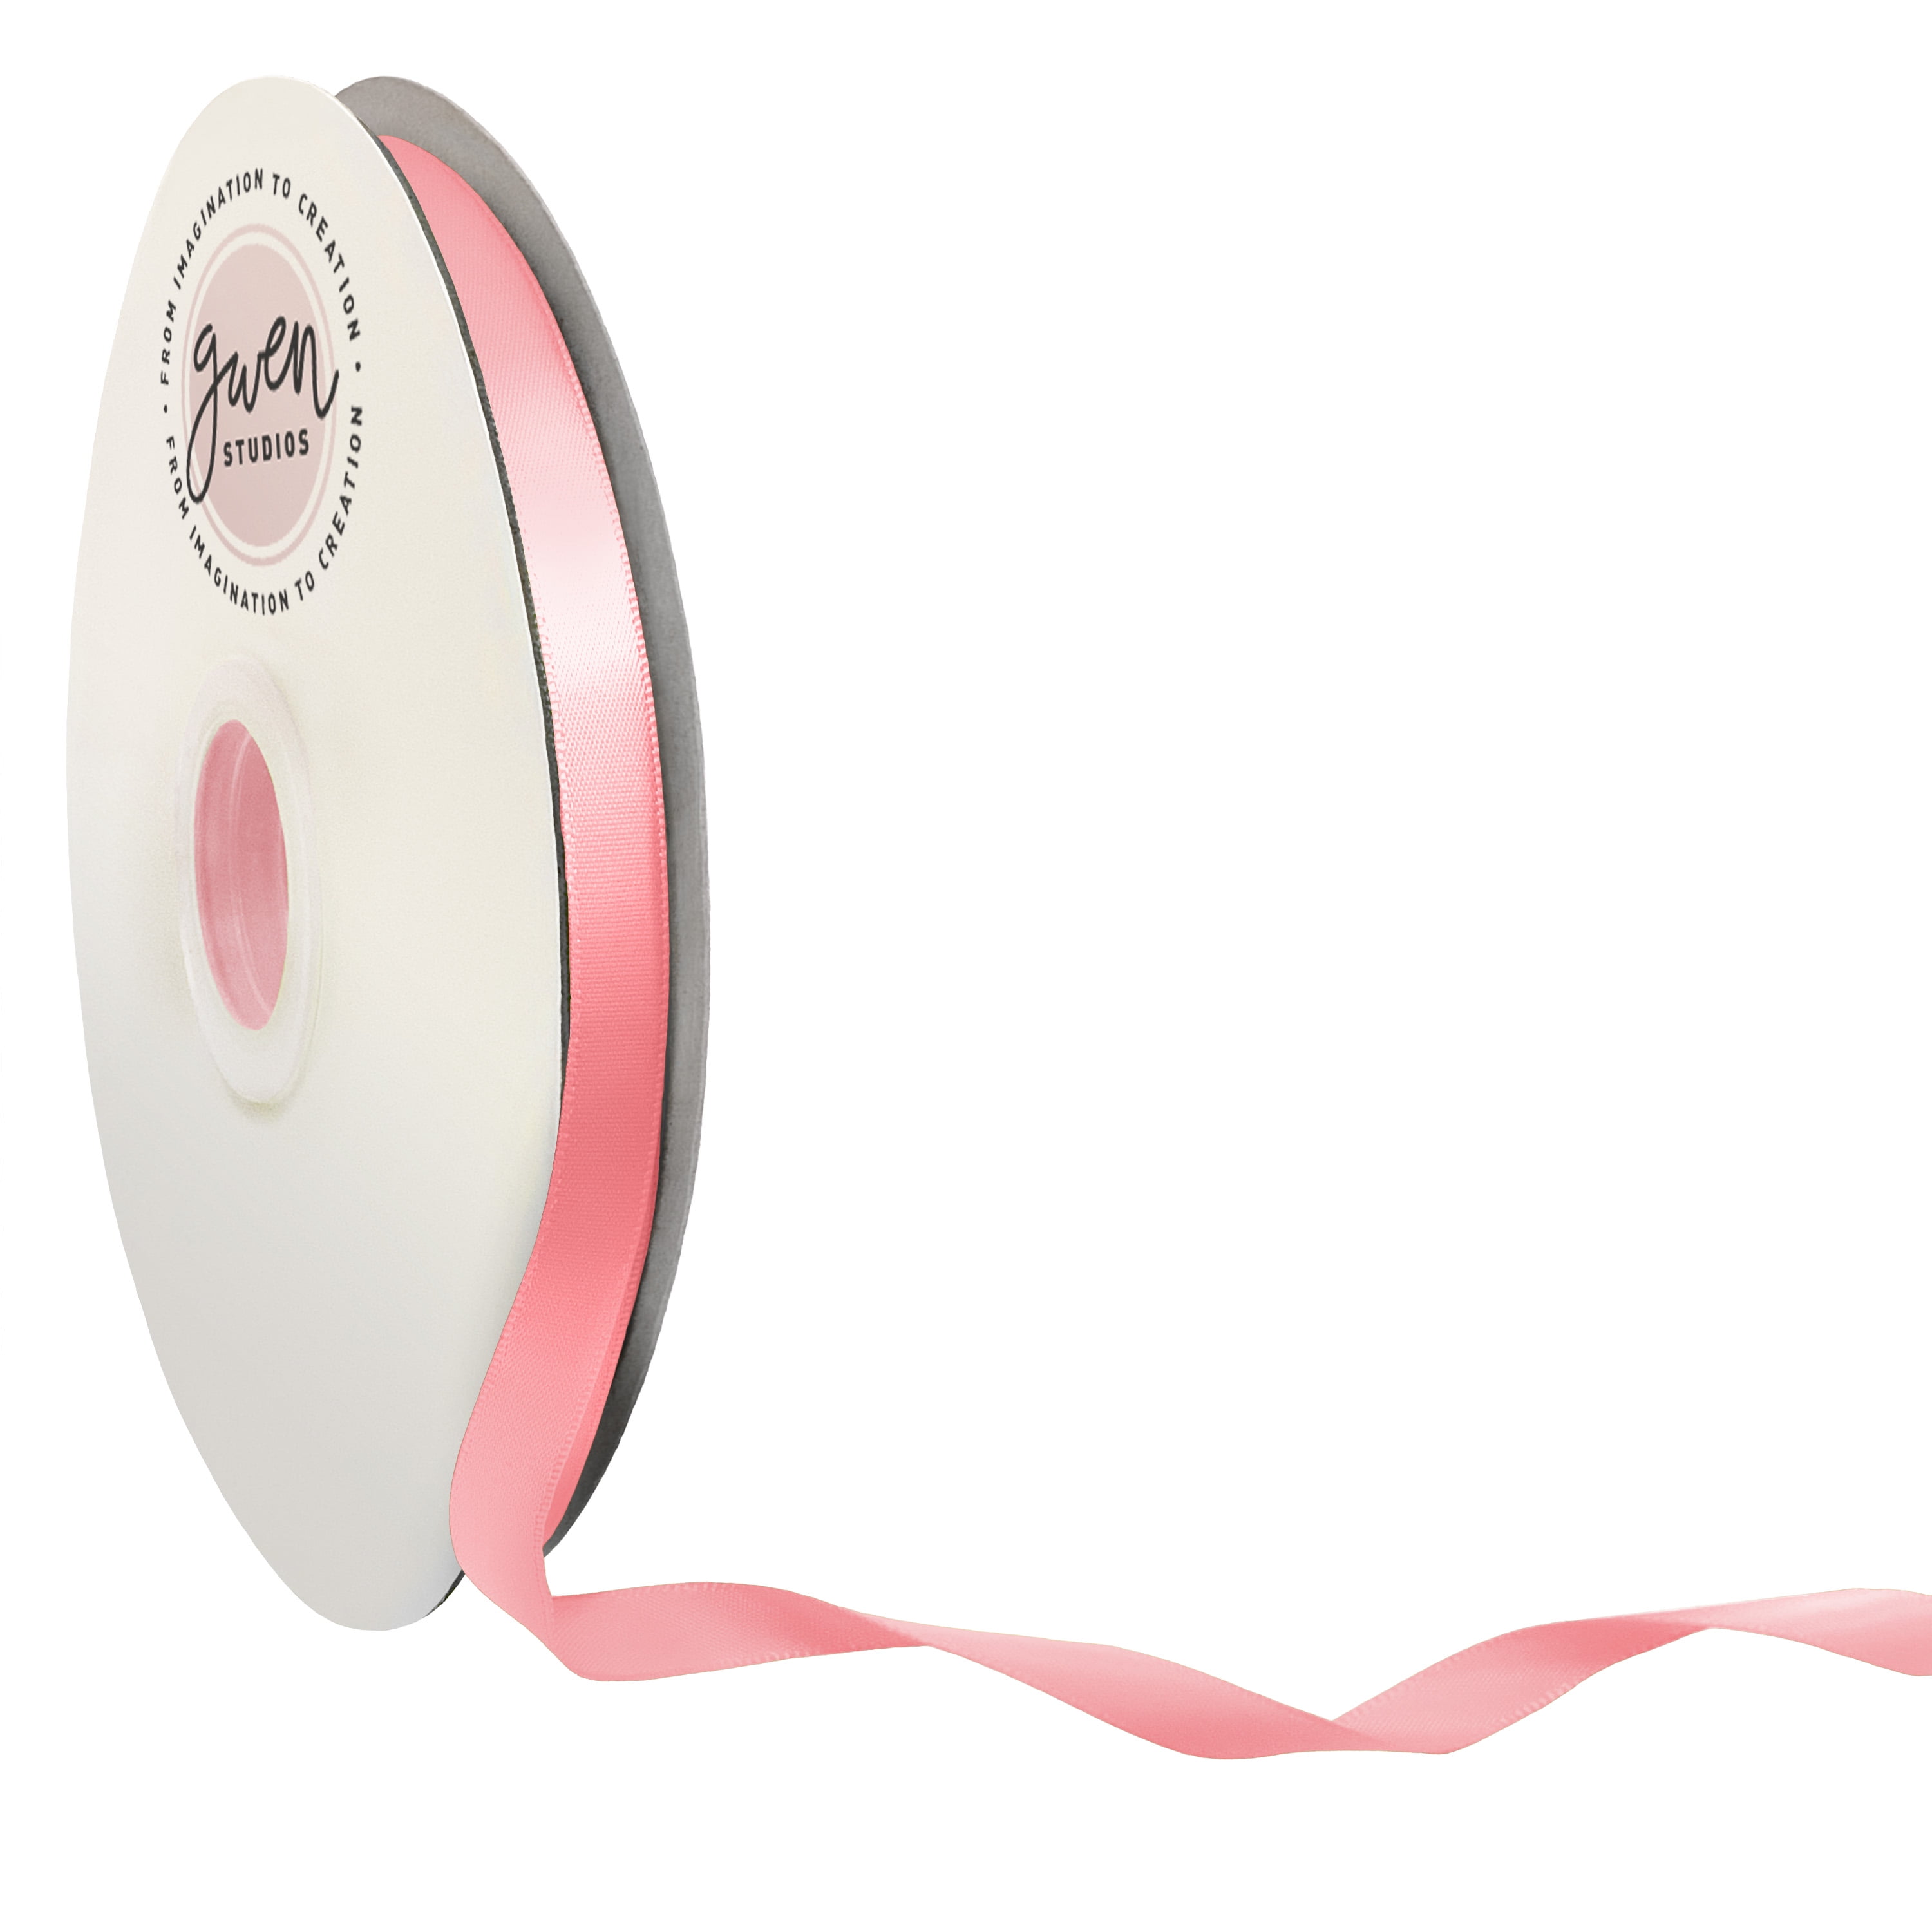 Satin Ribbon Single sided 50mm Hot Pink